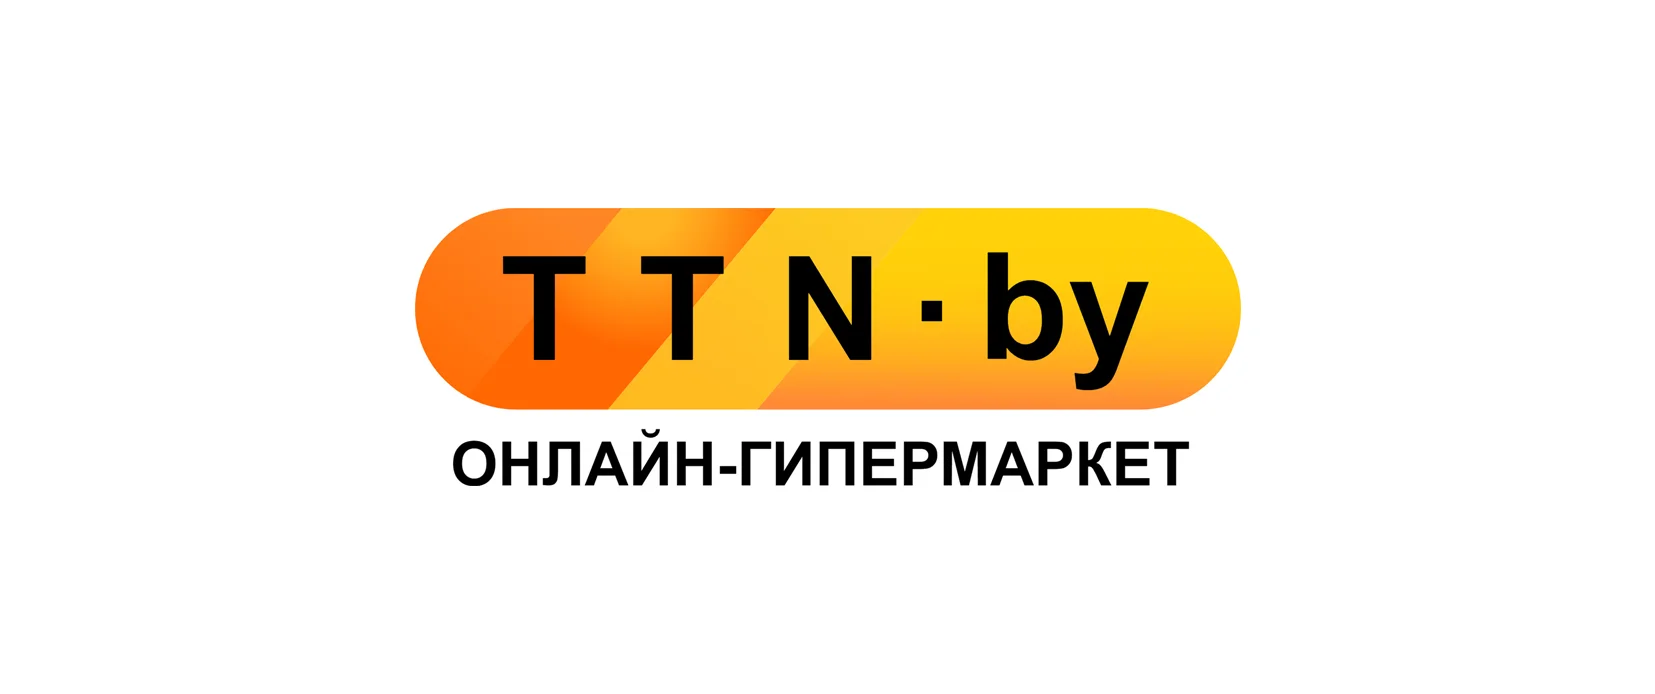 TTN.by - онлайн-гипермаркет